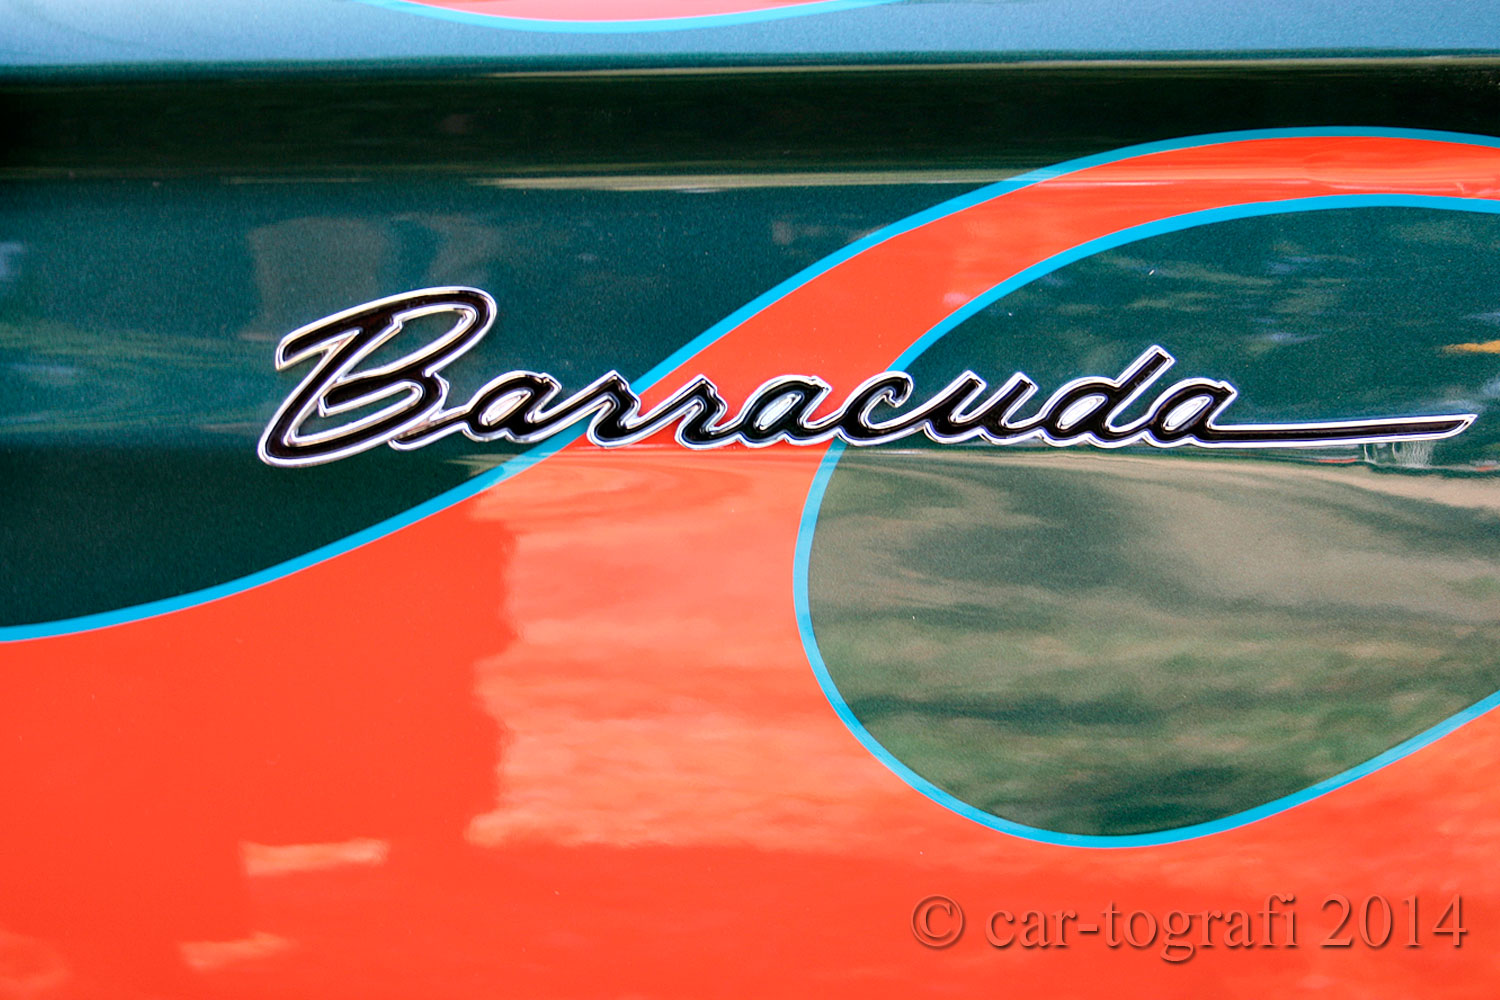 signature-barracuda-car-tografi-2014.jpg